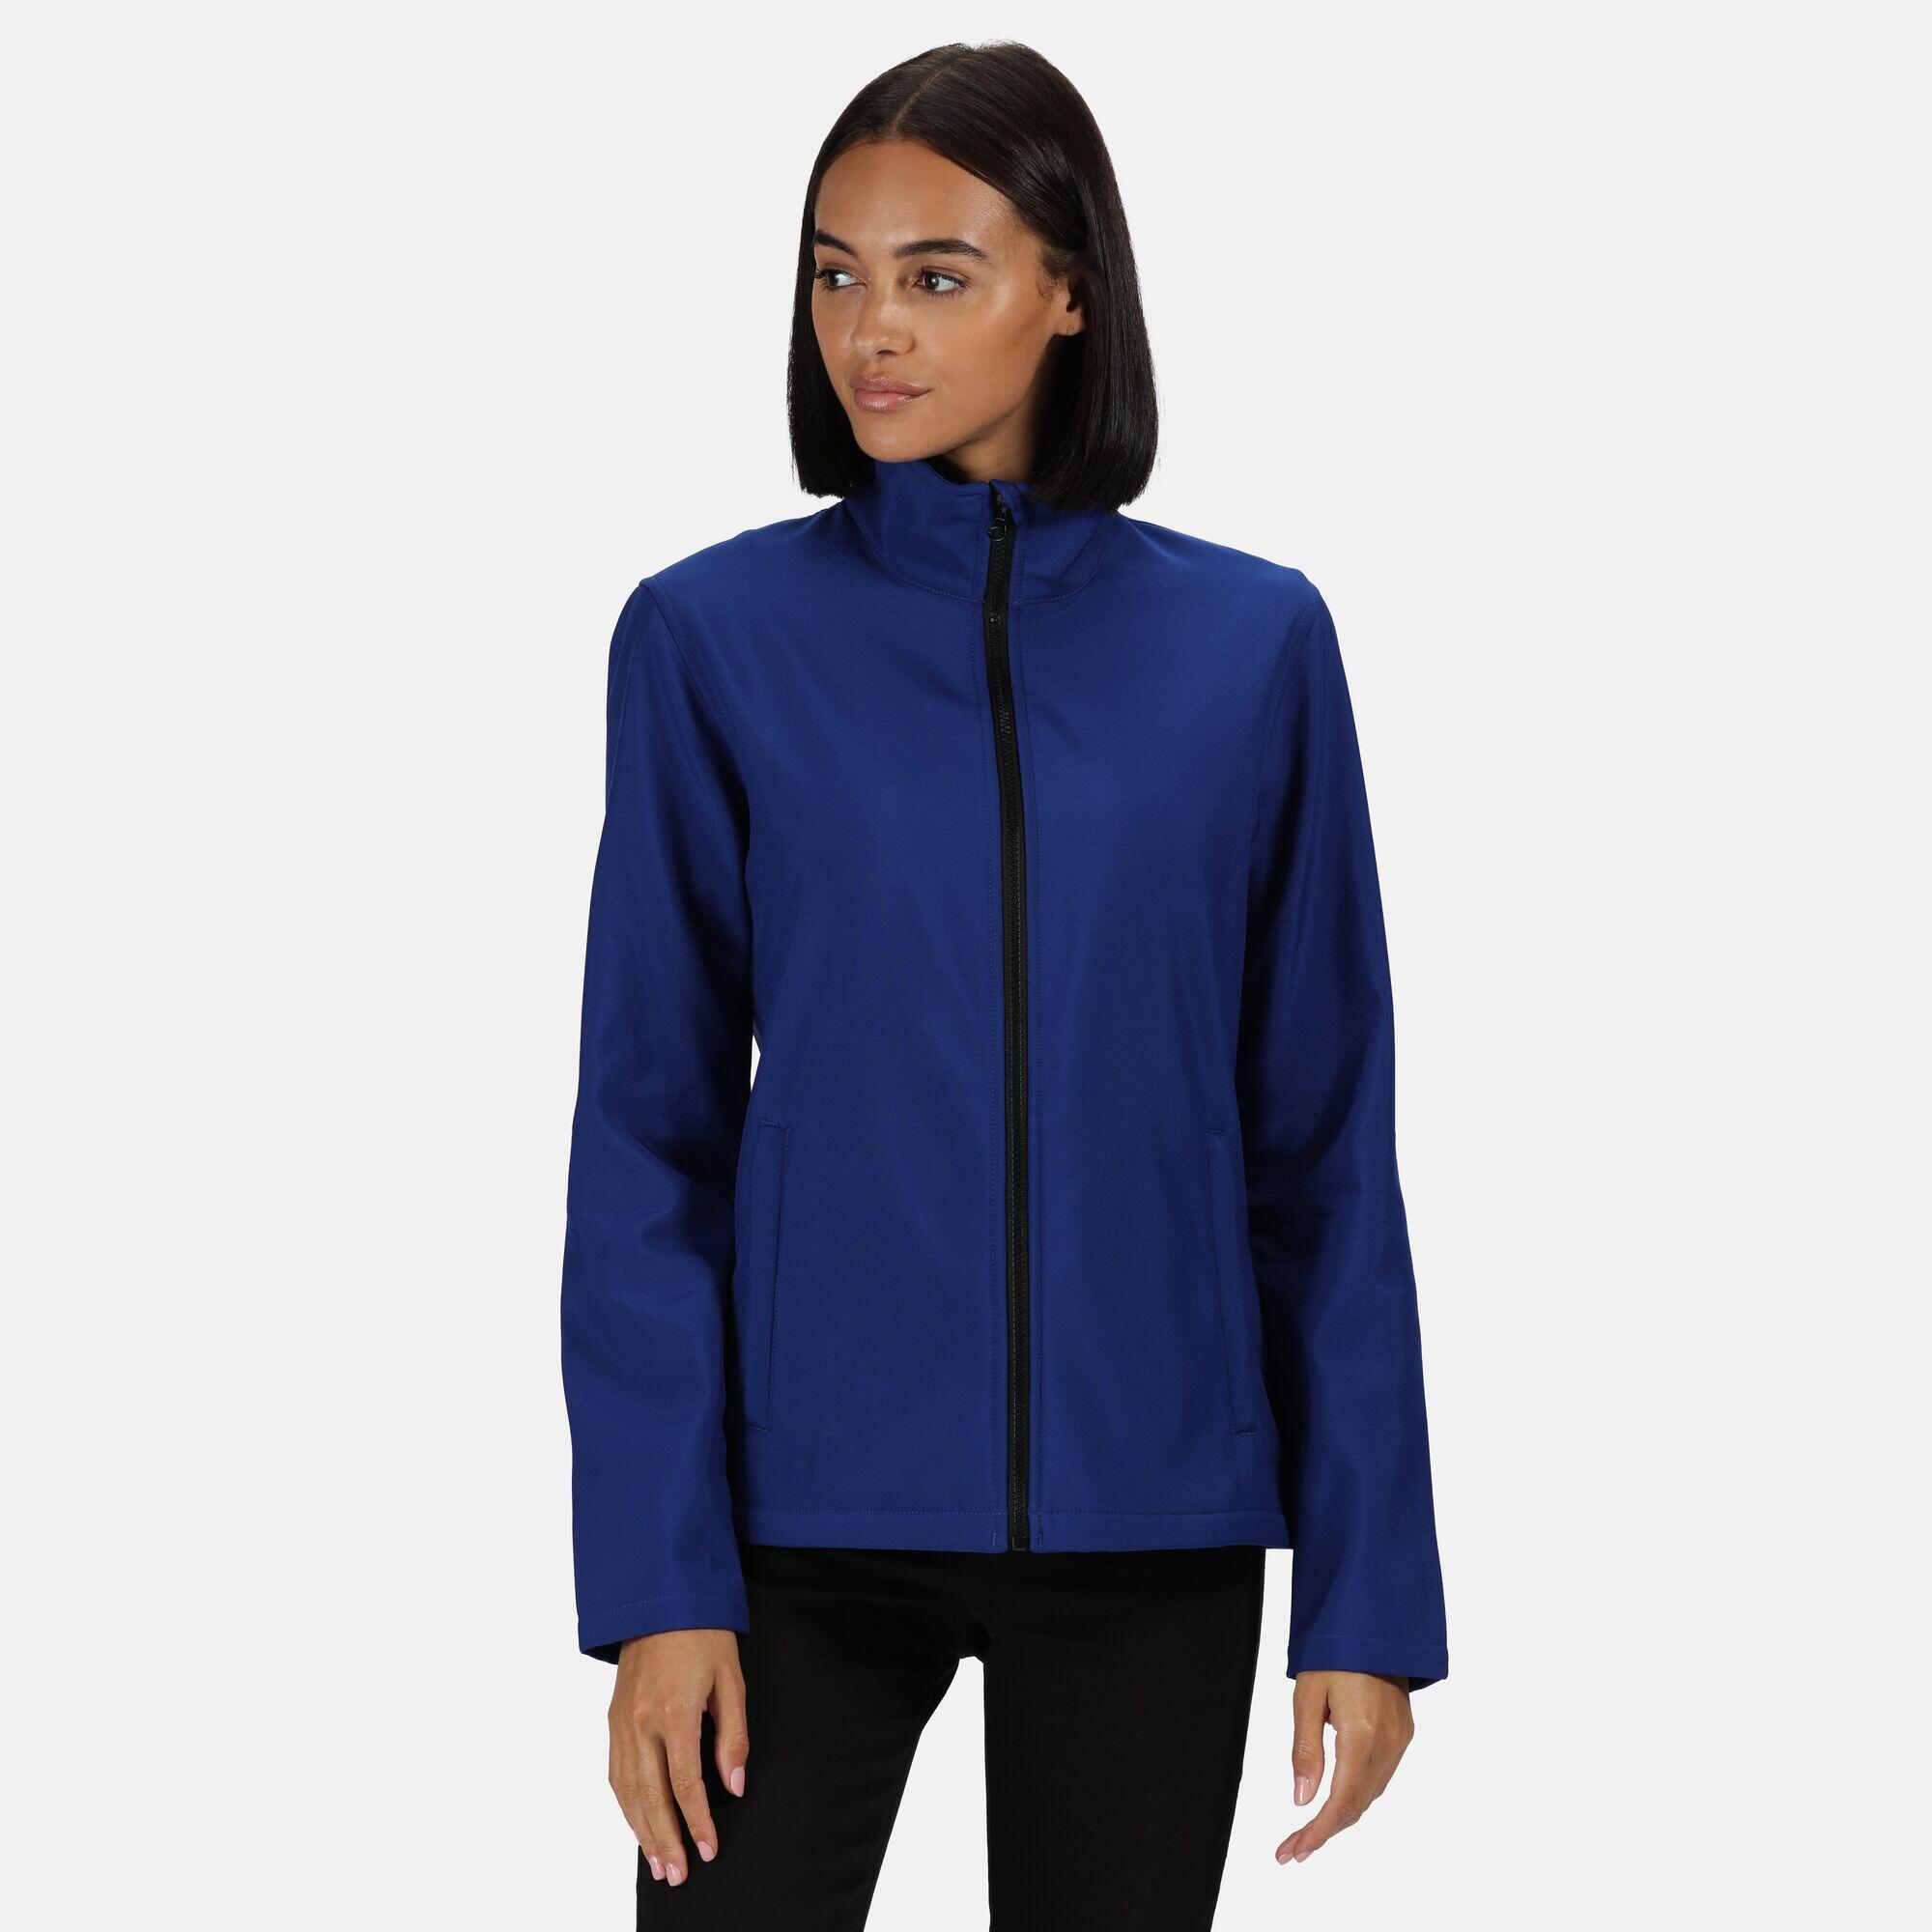 Standout Womens/Ladies Ablaze Printable Soft Shell Jacket (Royal Blue/Black) 4/5